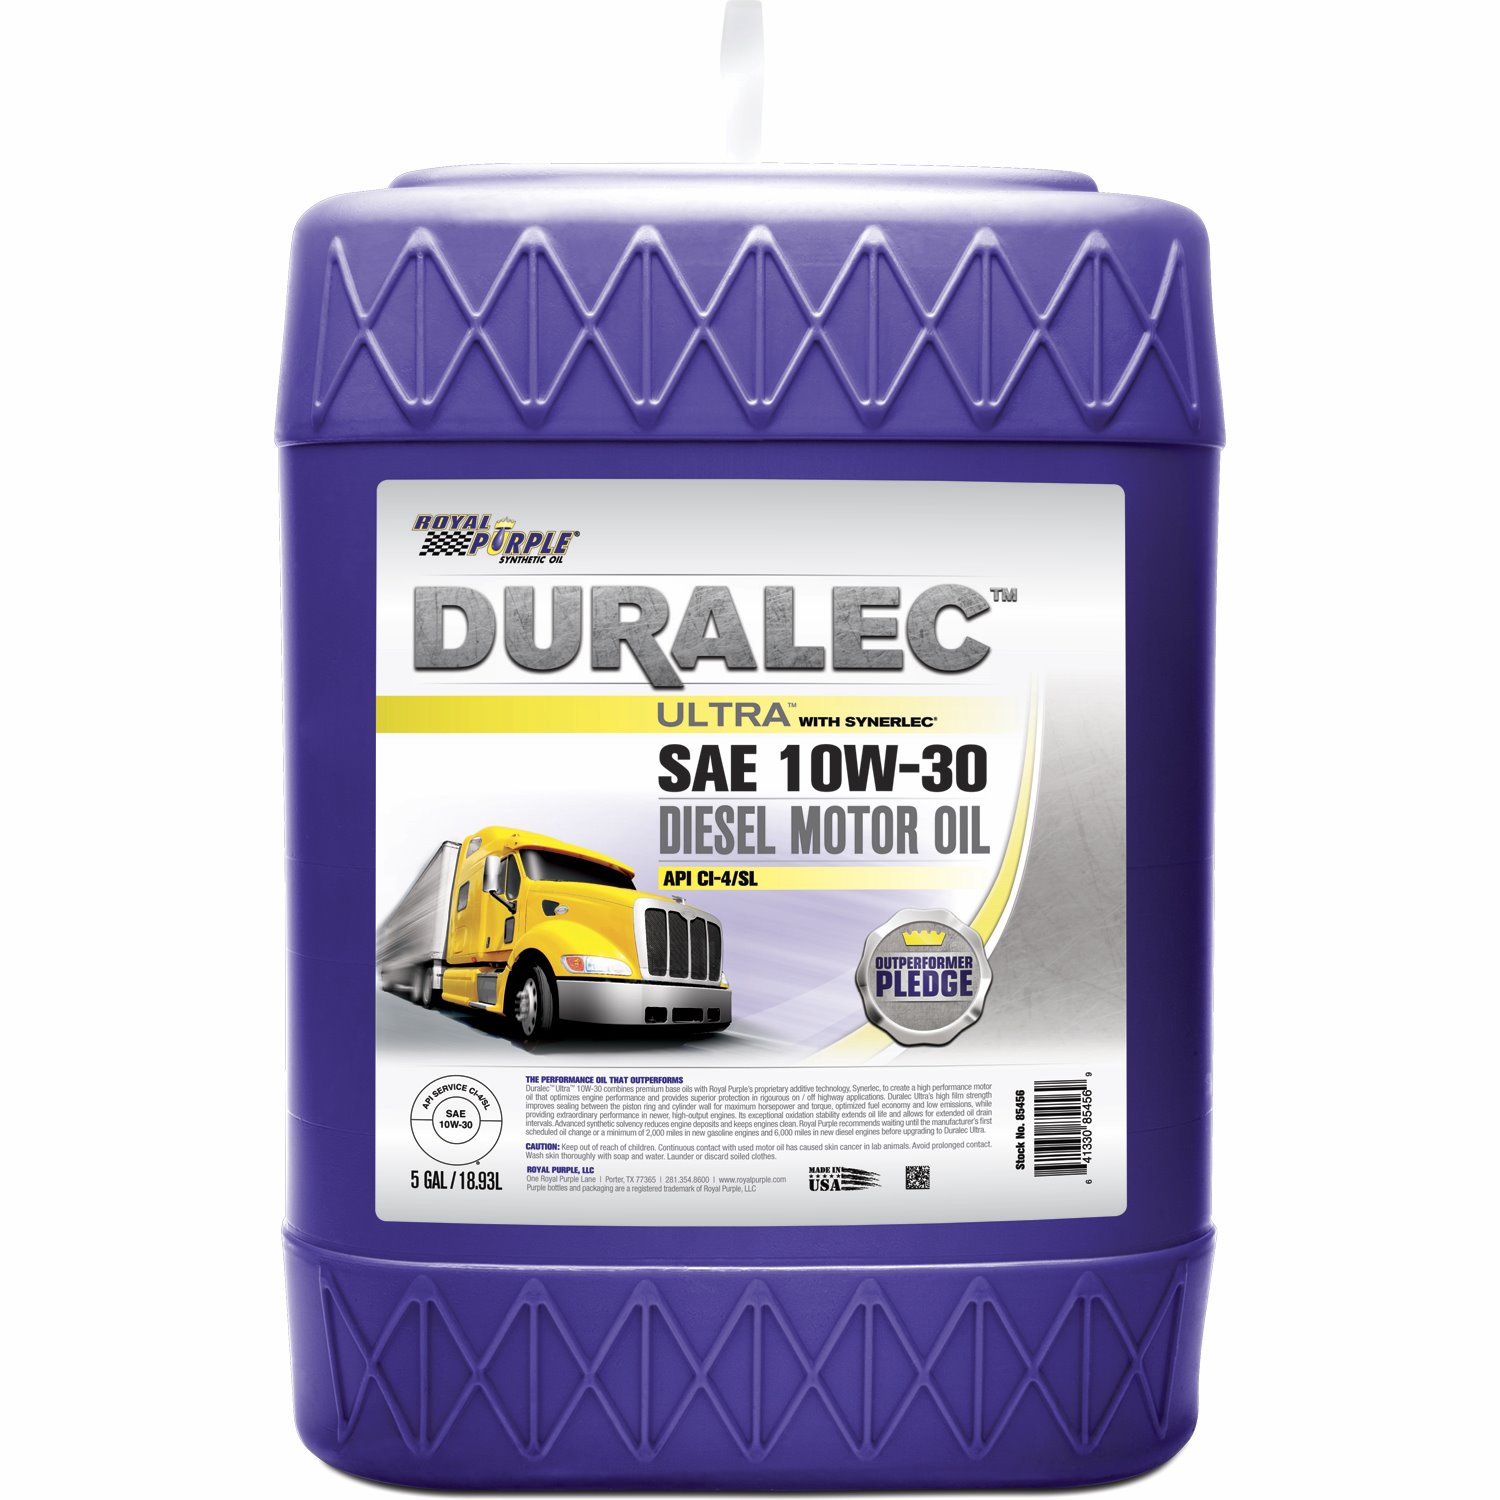 Duralec Ultra Motor Oil 10W-30, 5 Gallon